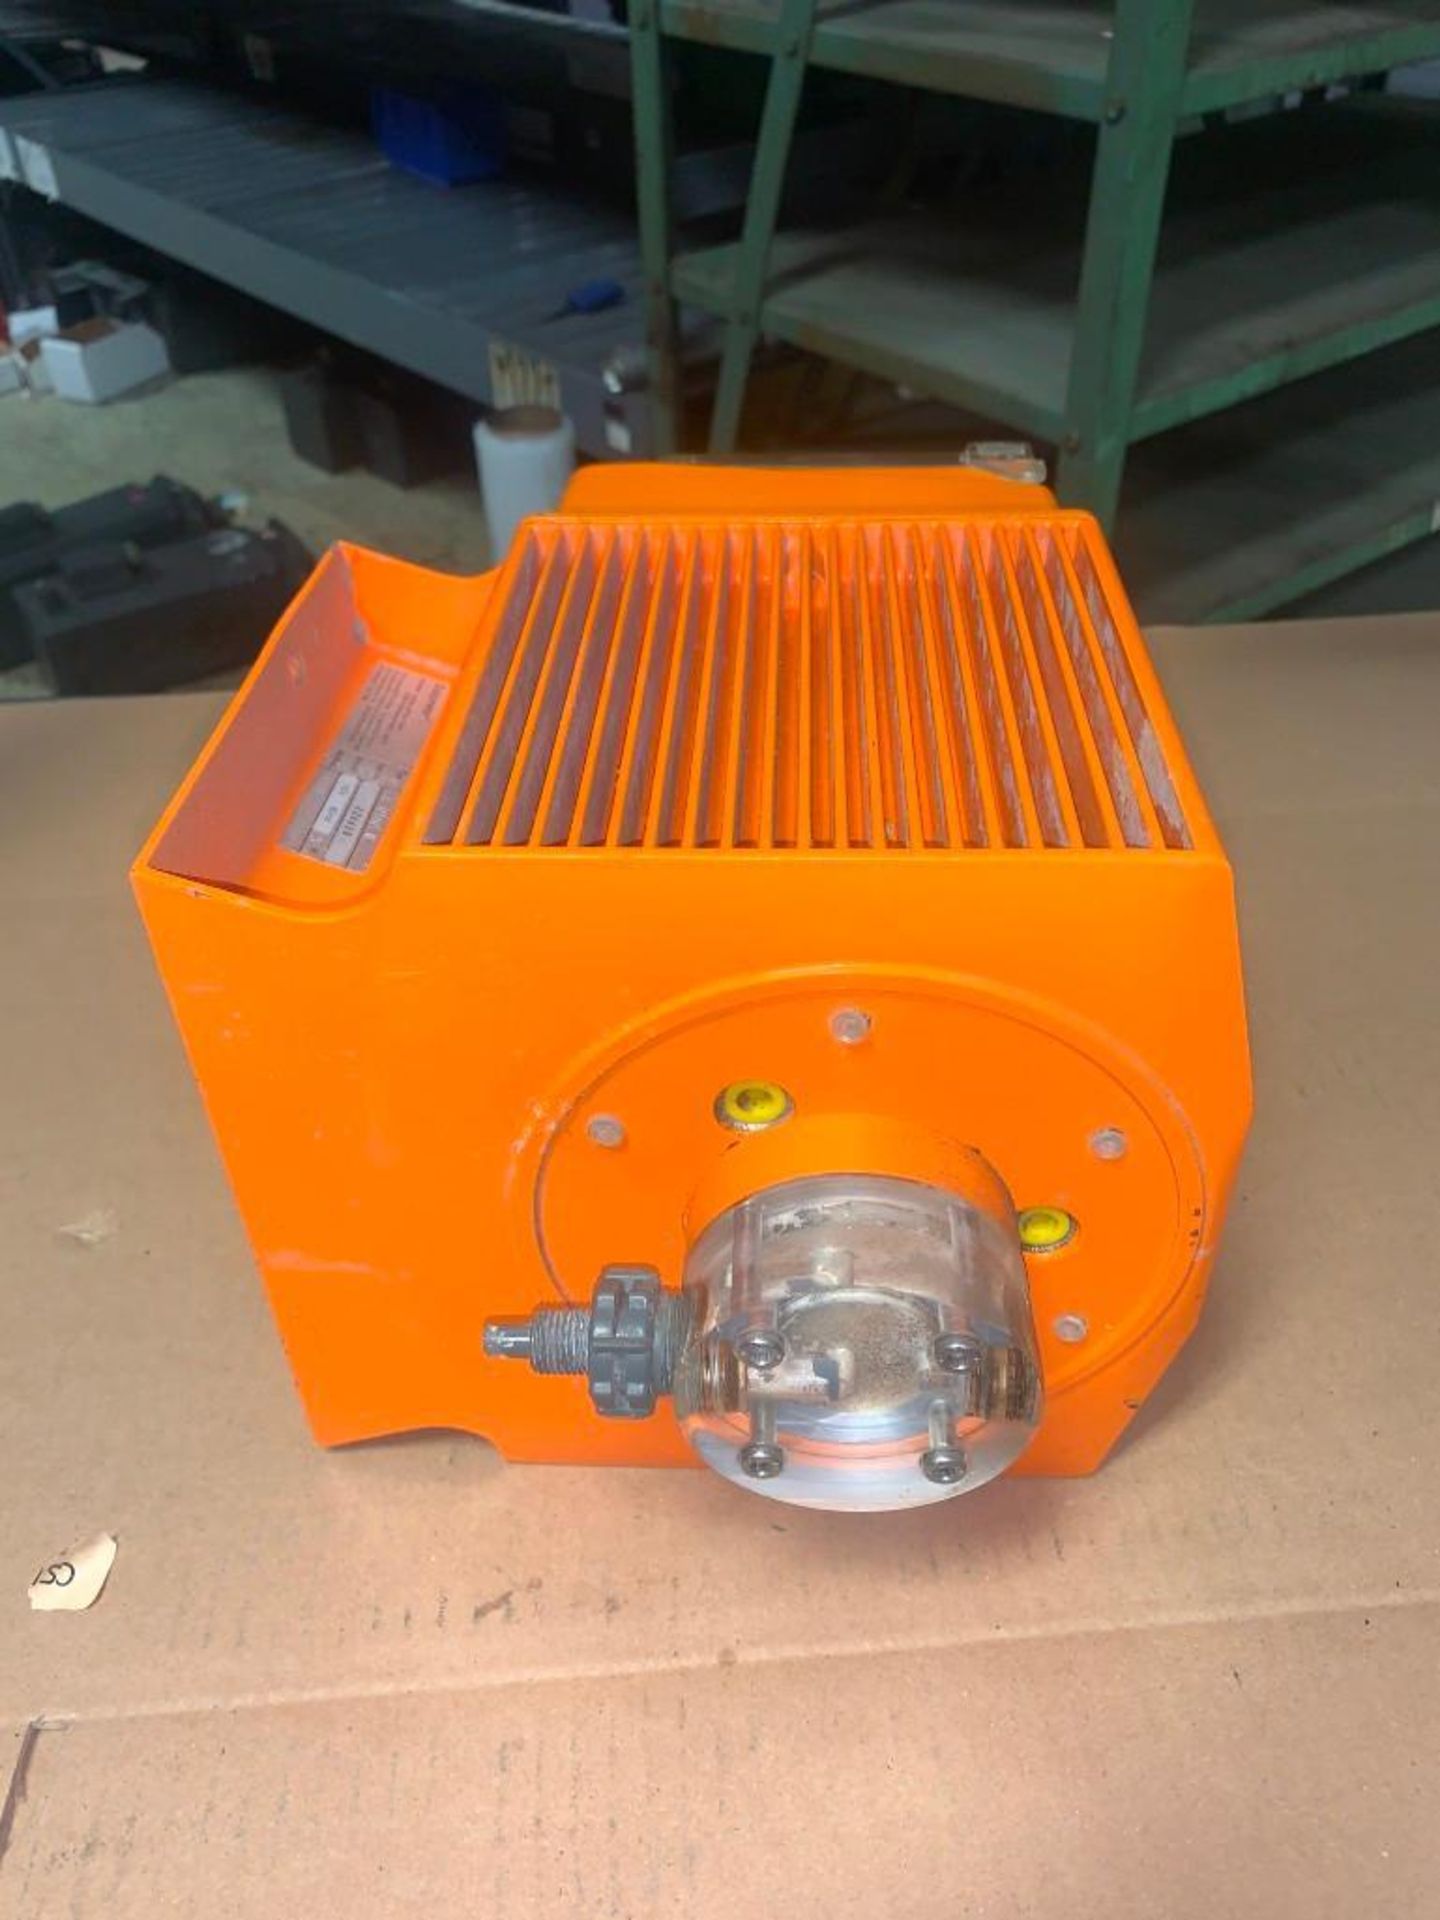 Dulcometer Prominent Metering Pump, Typ# C 0308 N, 115 V, 60 Hz, 23 W - Image 3 of 4